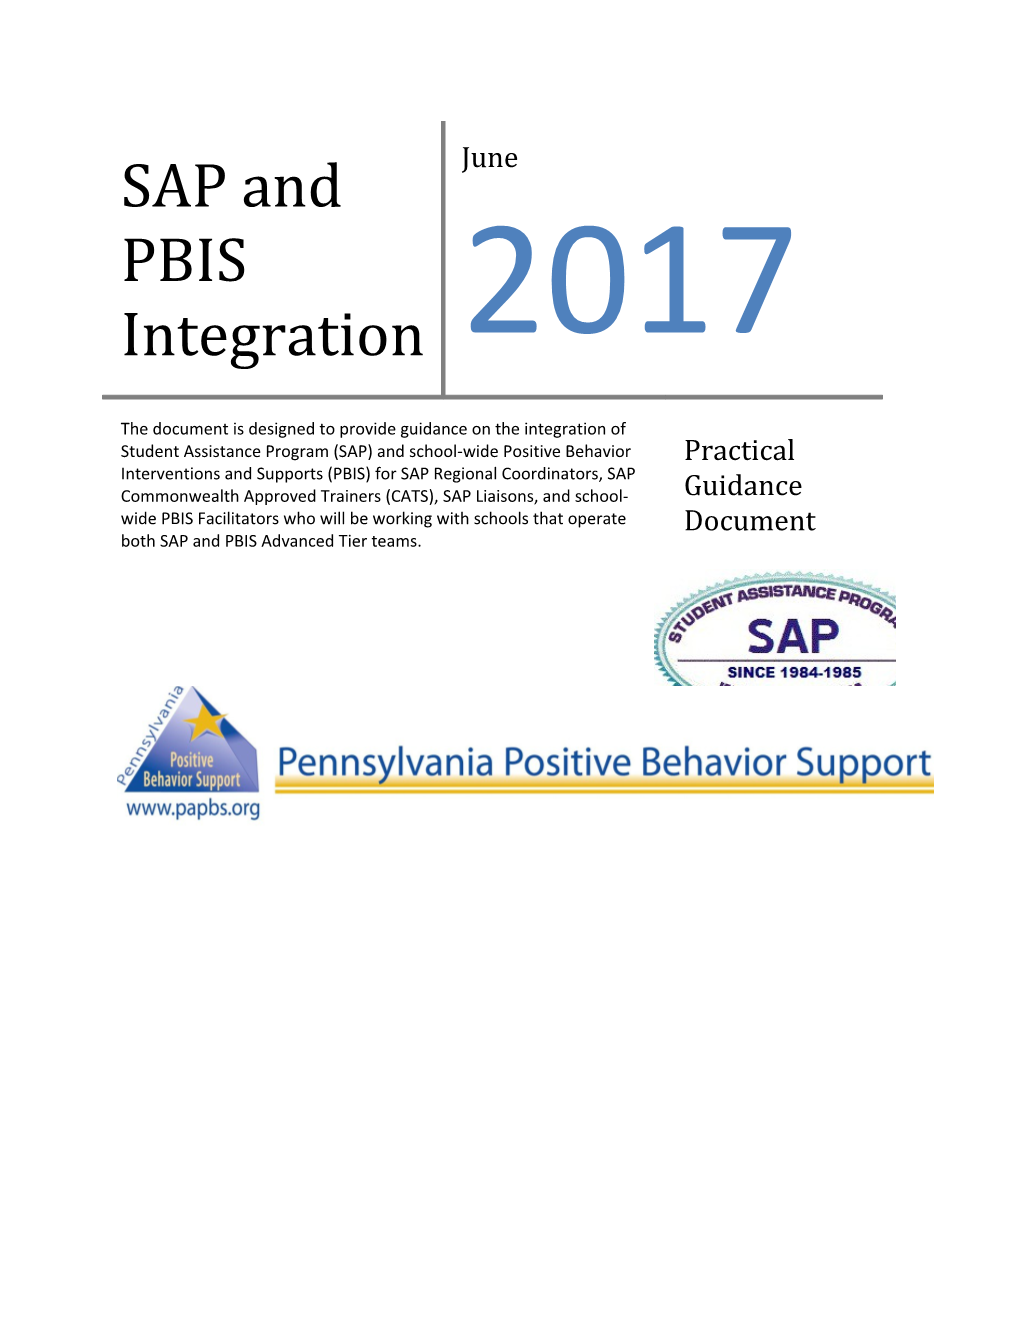 SAP and PBIS Integration